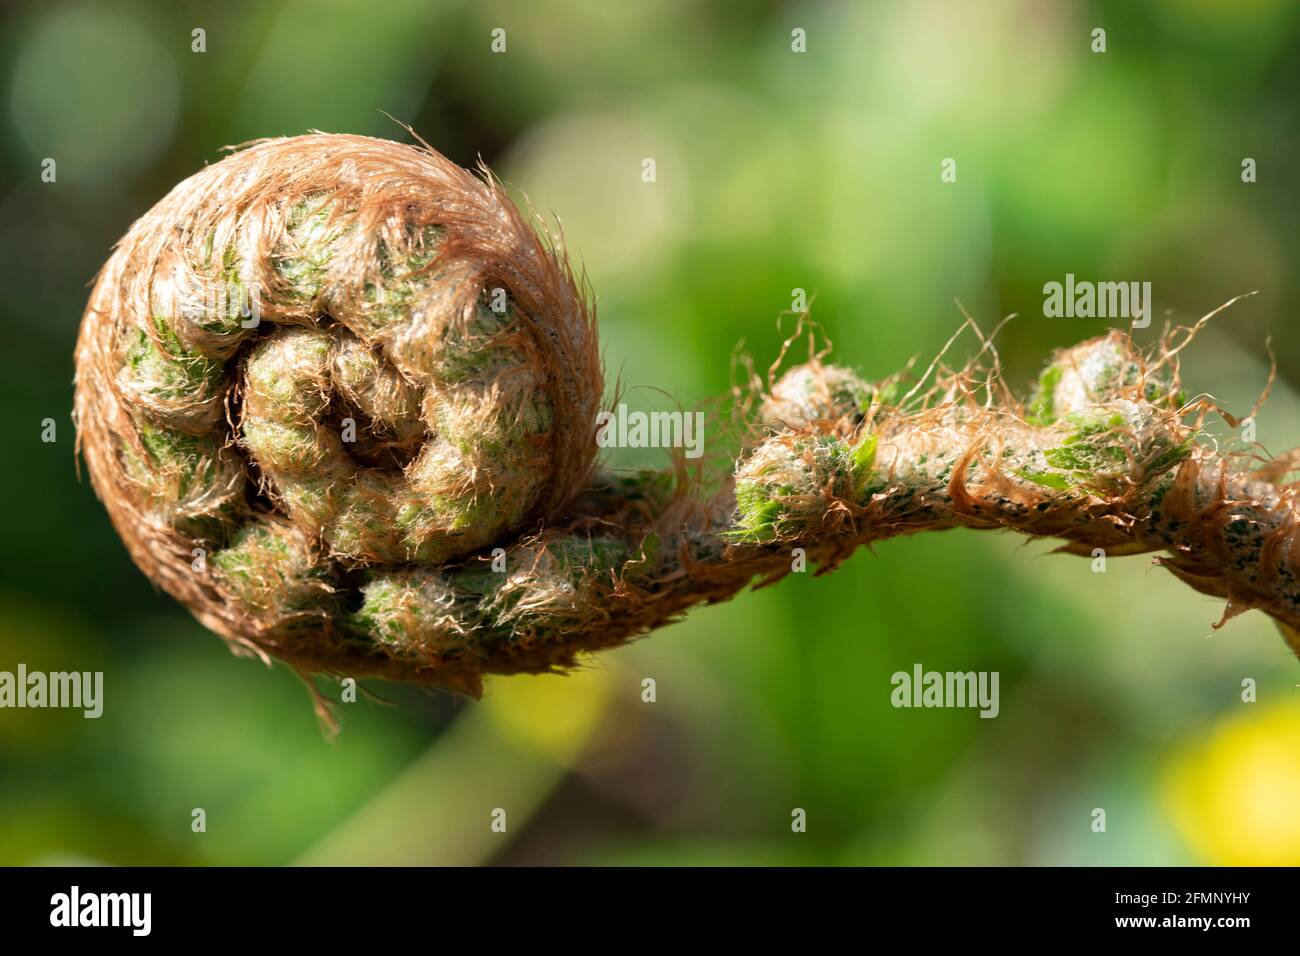 An unfurling fern frond in springtime, UK Stock Photo